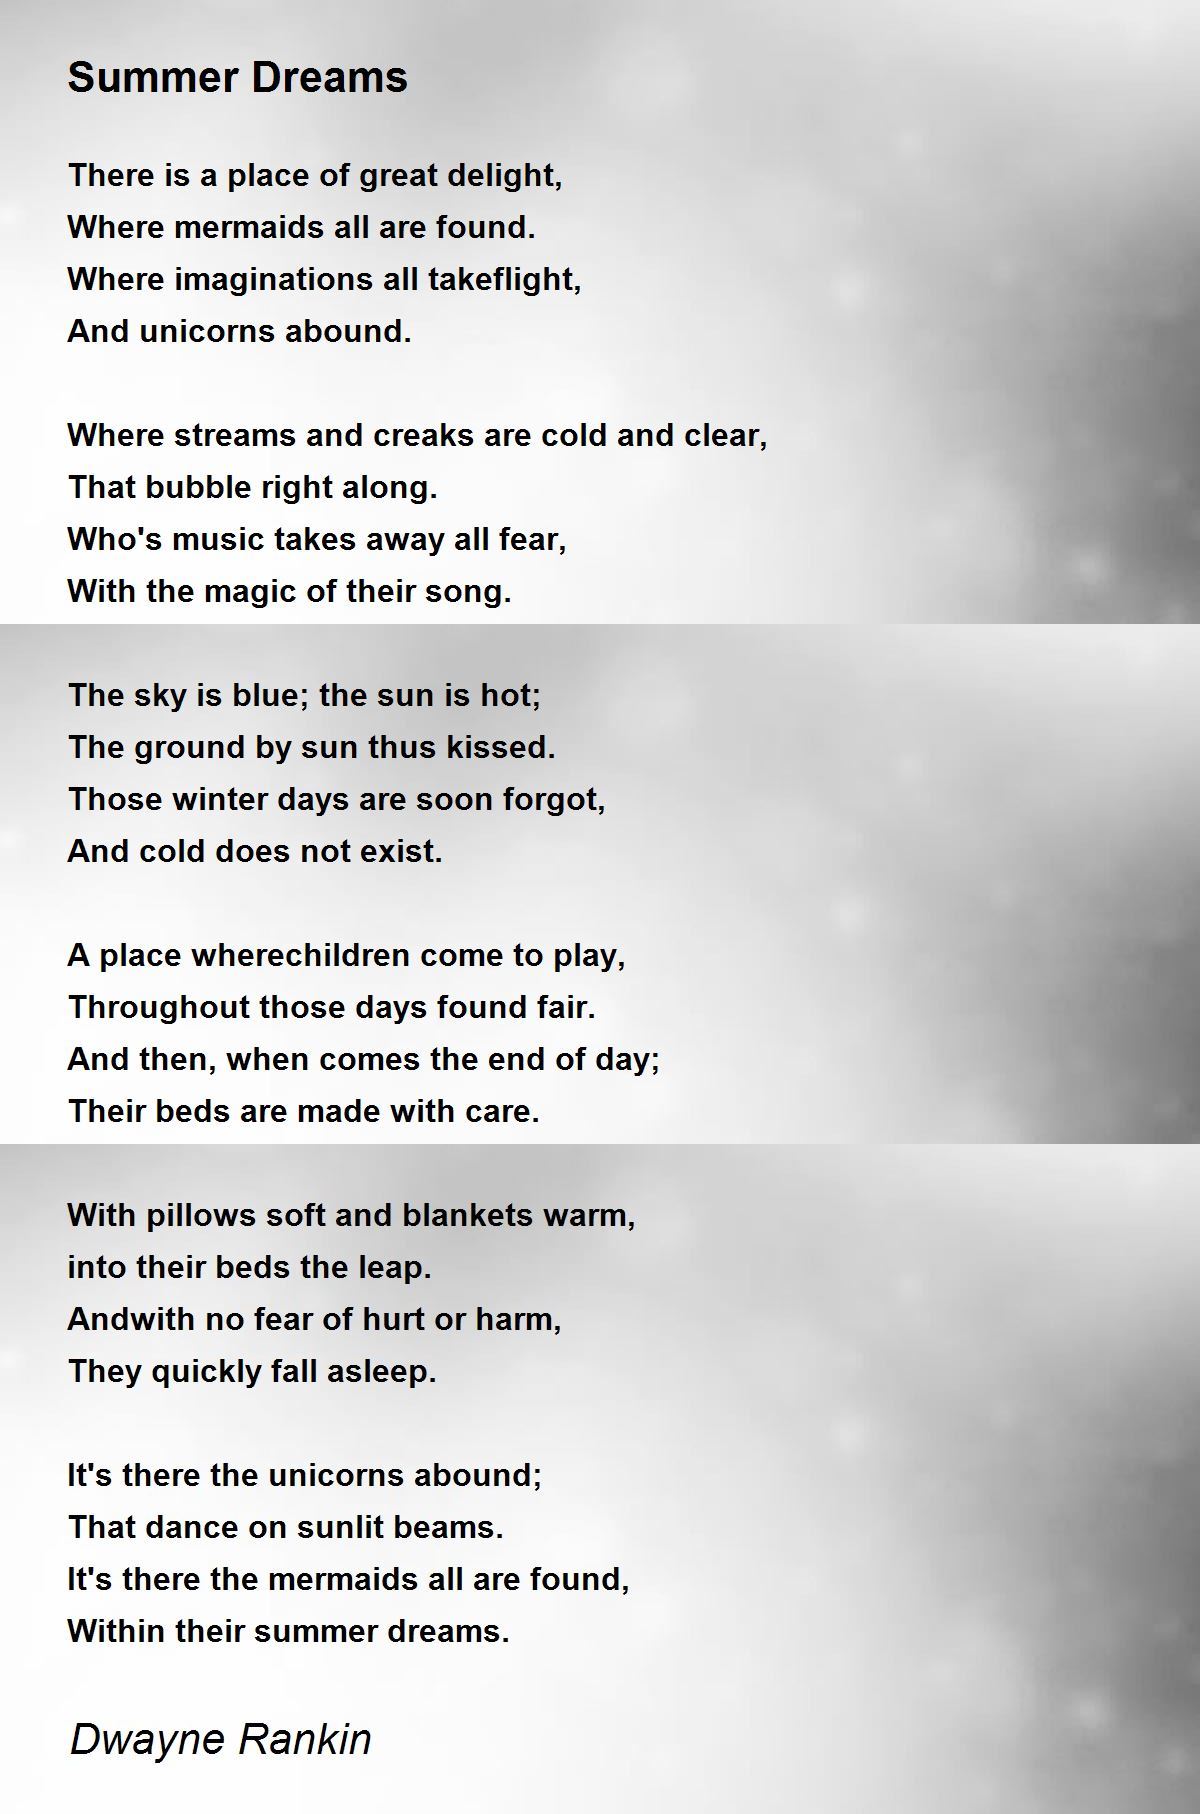 Summer Dreams - Summer Dreams Poem by Dwayne Rankin